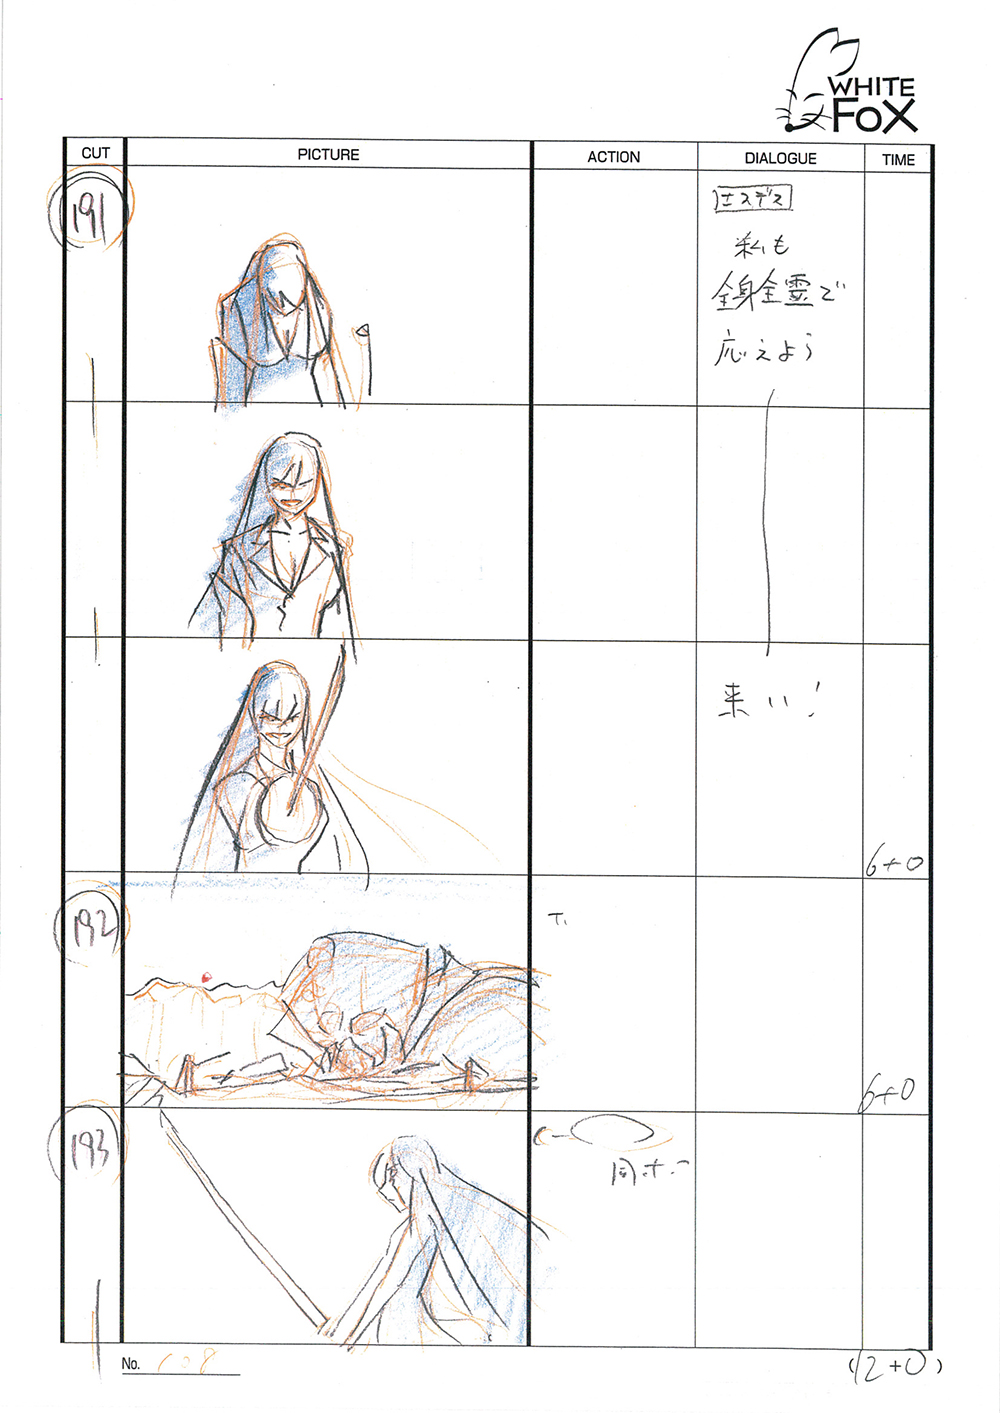 Akame ga Kill Episode 24 Storyboard Leak 111